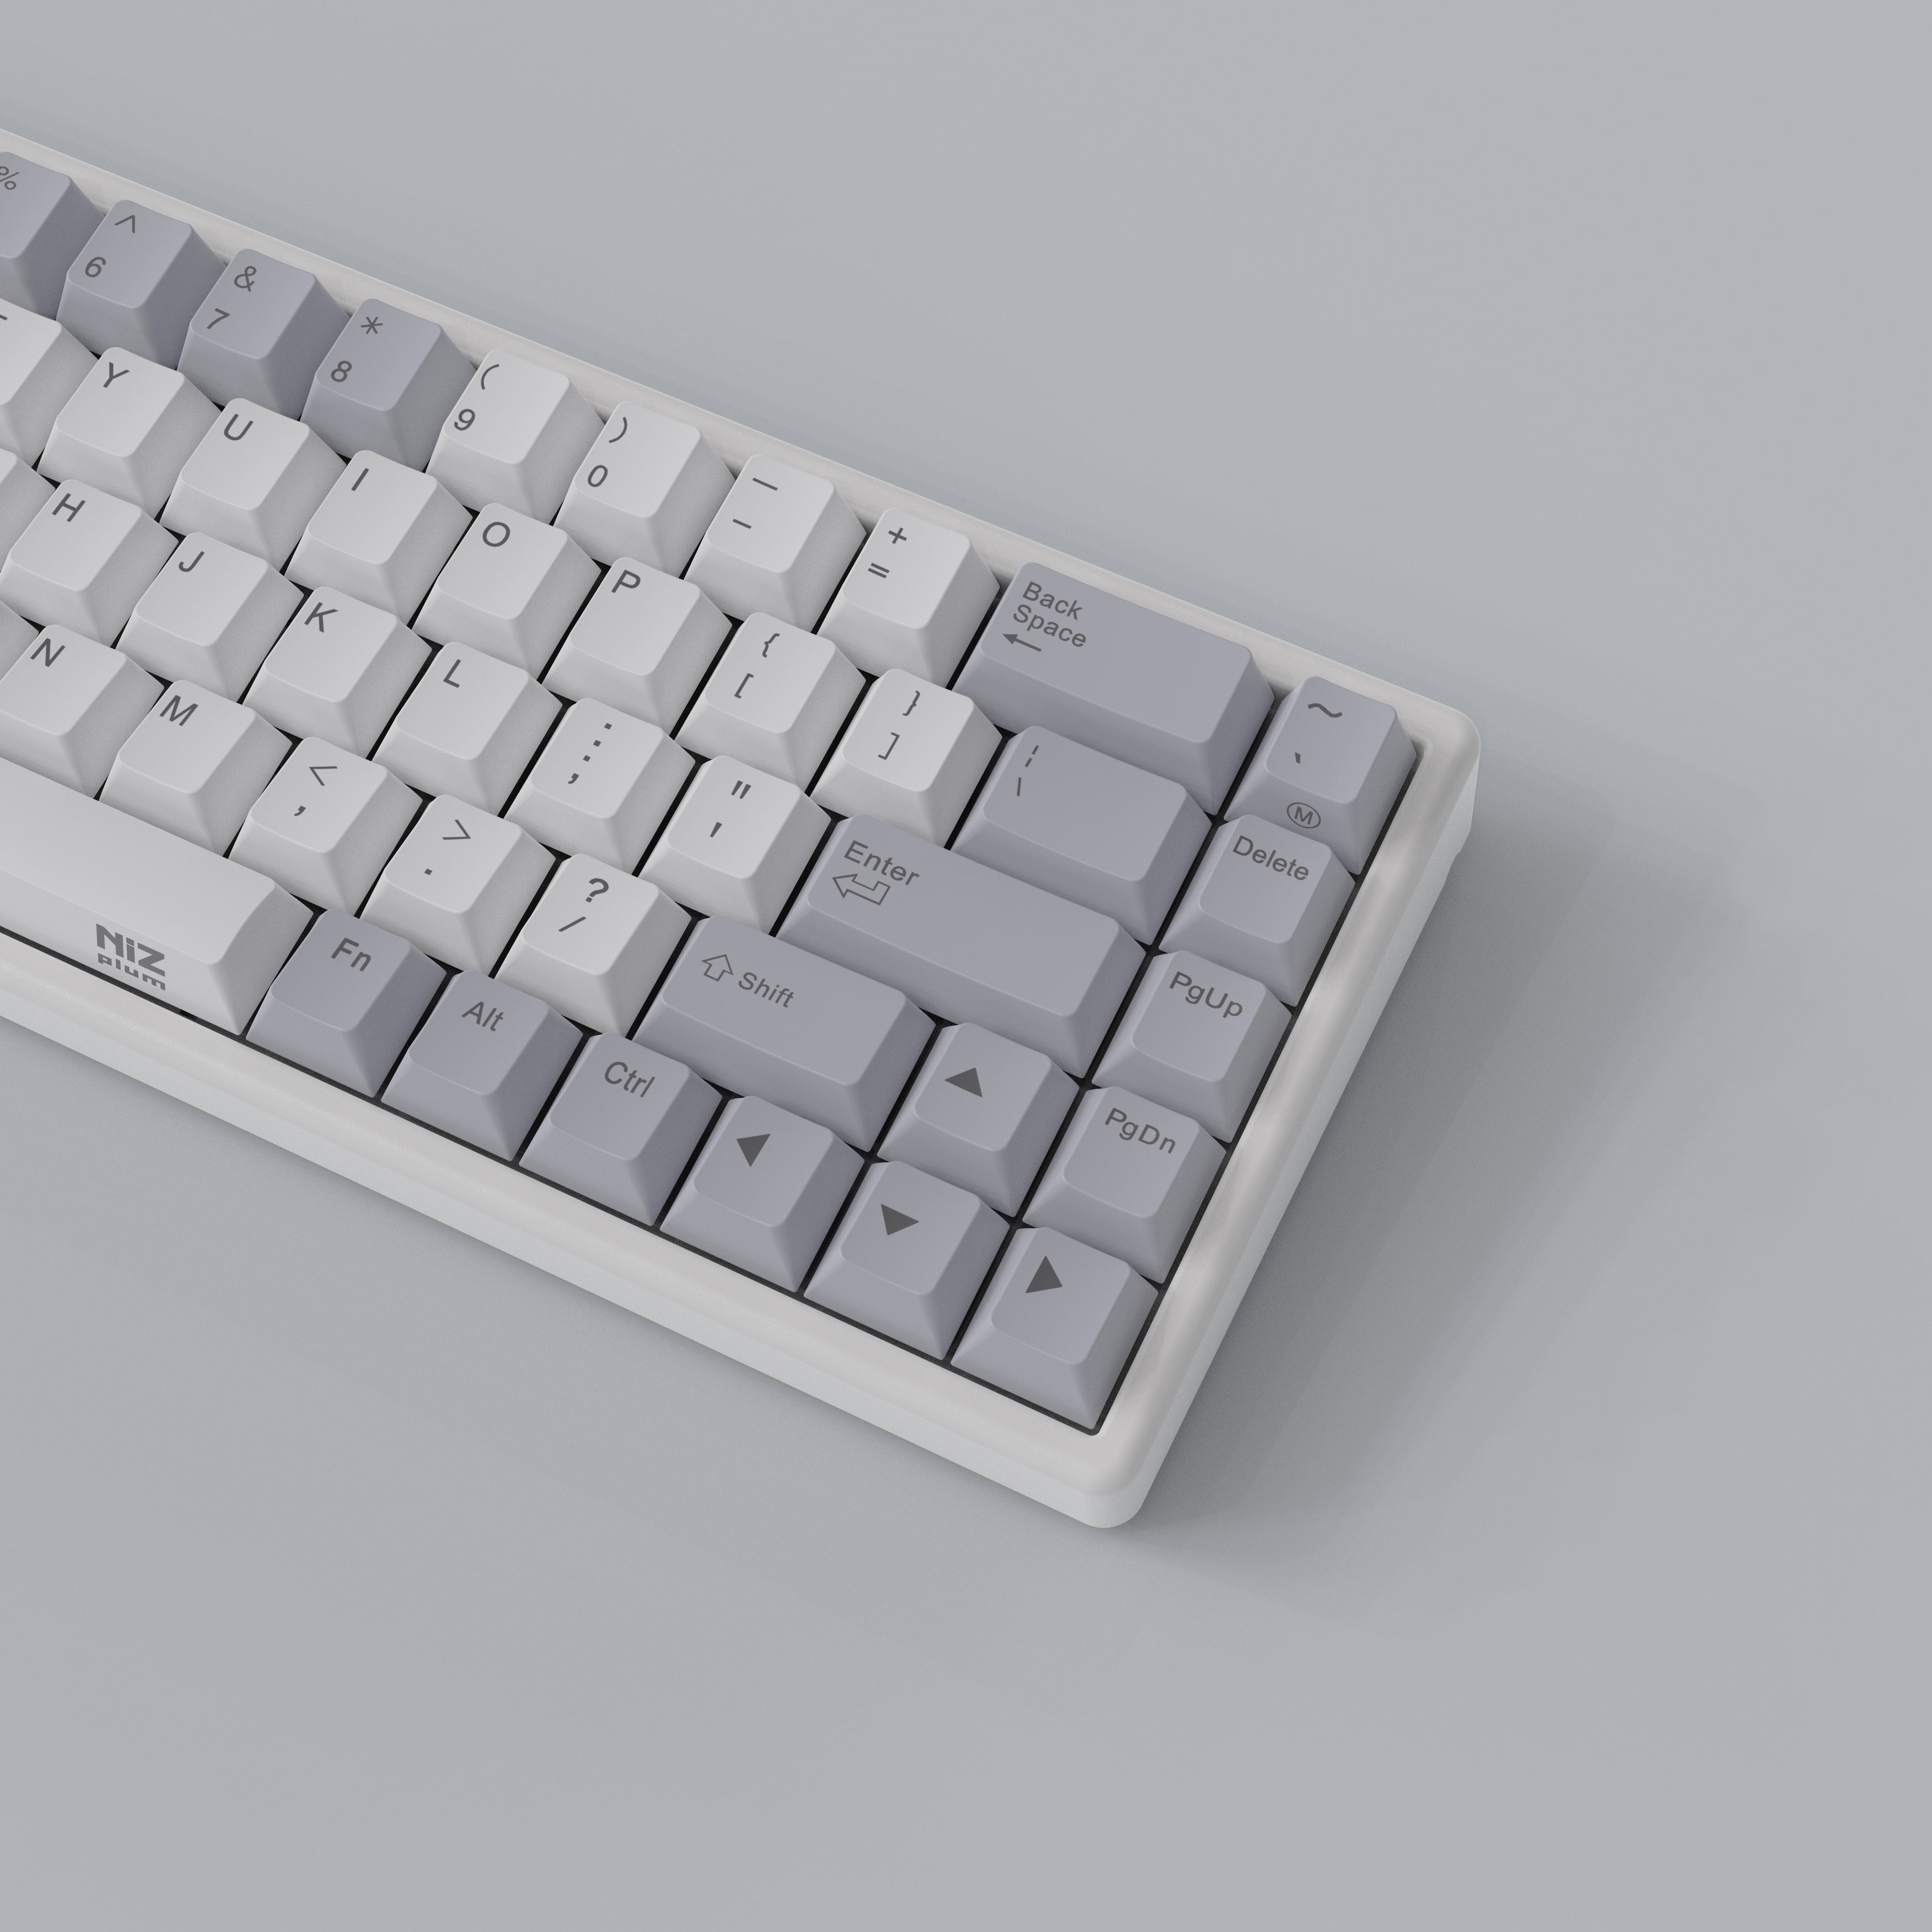 NIZ Keyboard ATOM 68 Capacitive Keyboard